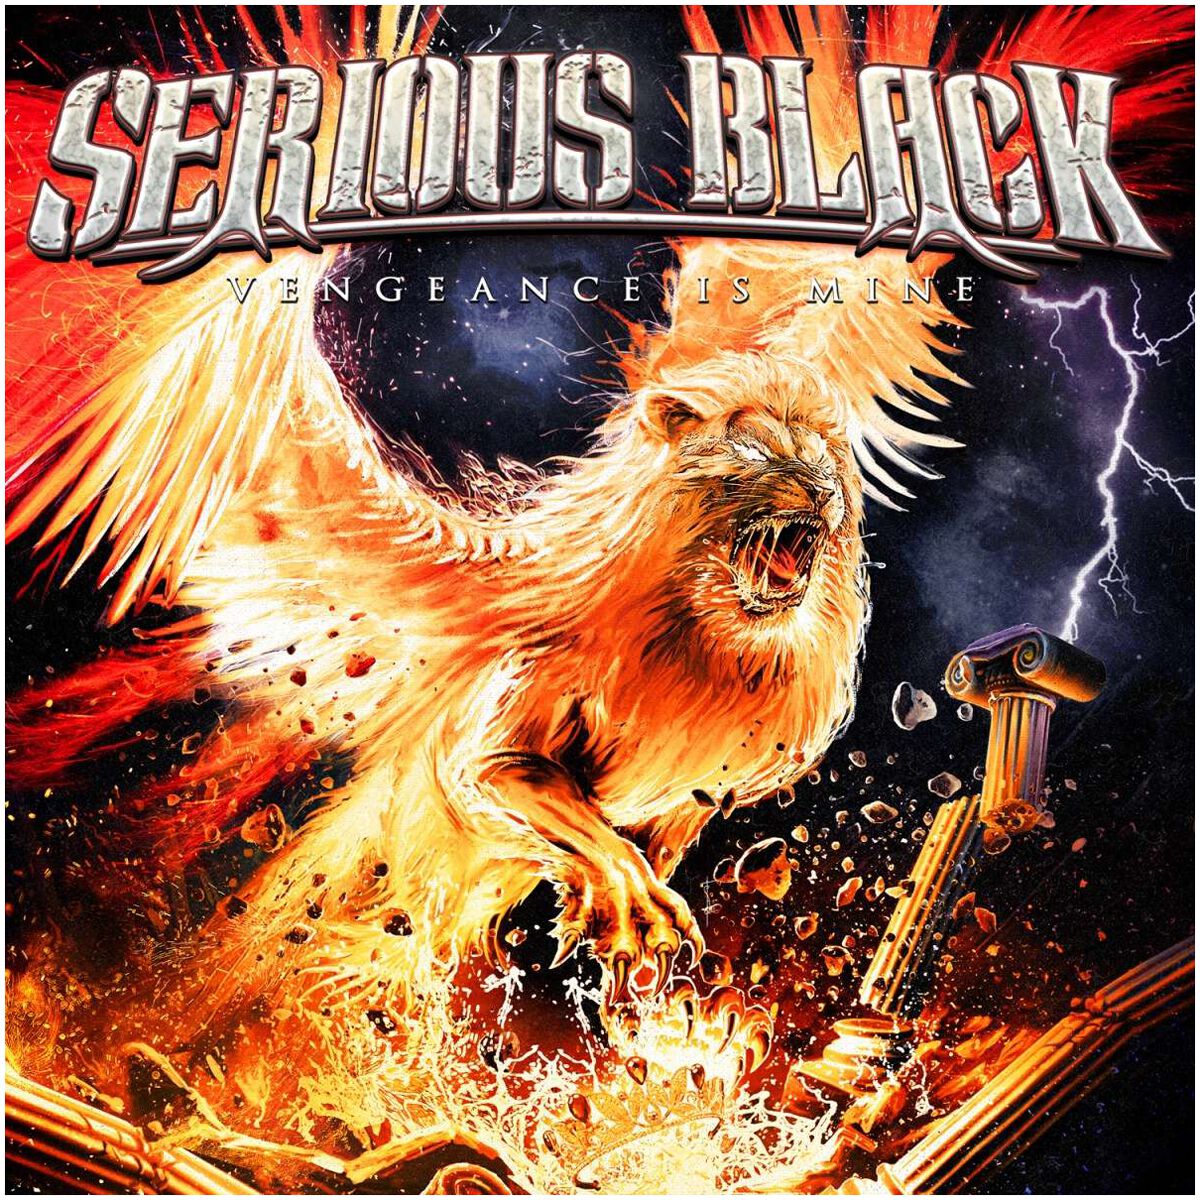 Vengeance is mine von Serious Black - CD & Patch (Digipak)